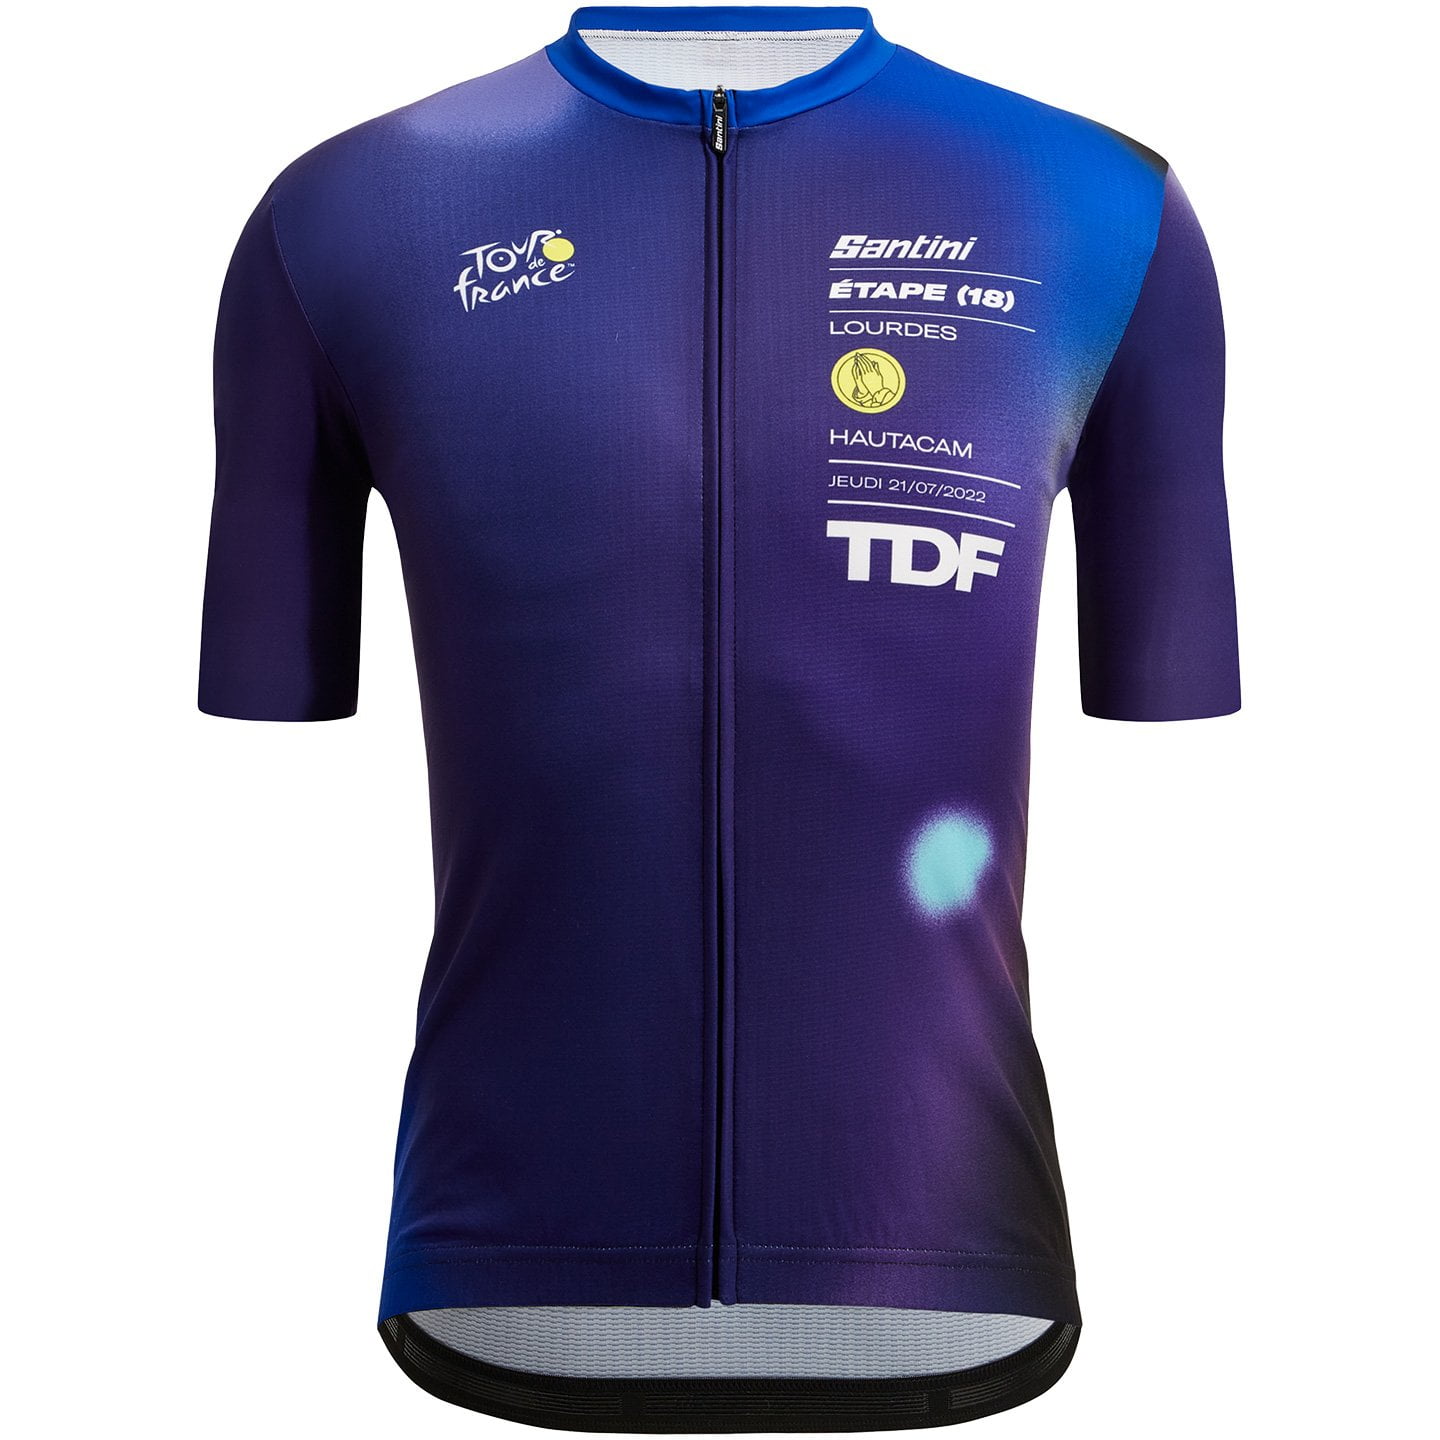 TOUR DE FRANCE Lourdes-Hautacam 2022 Short Sleeve Jersey, for men, size 2XL, Cycle shirt, Bike gear